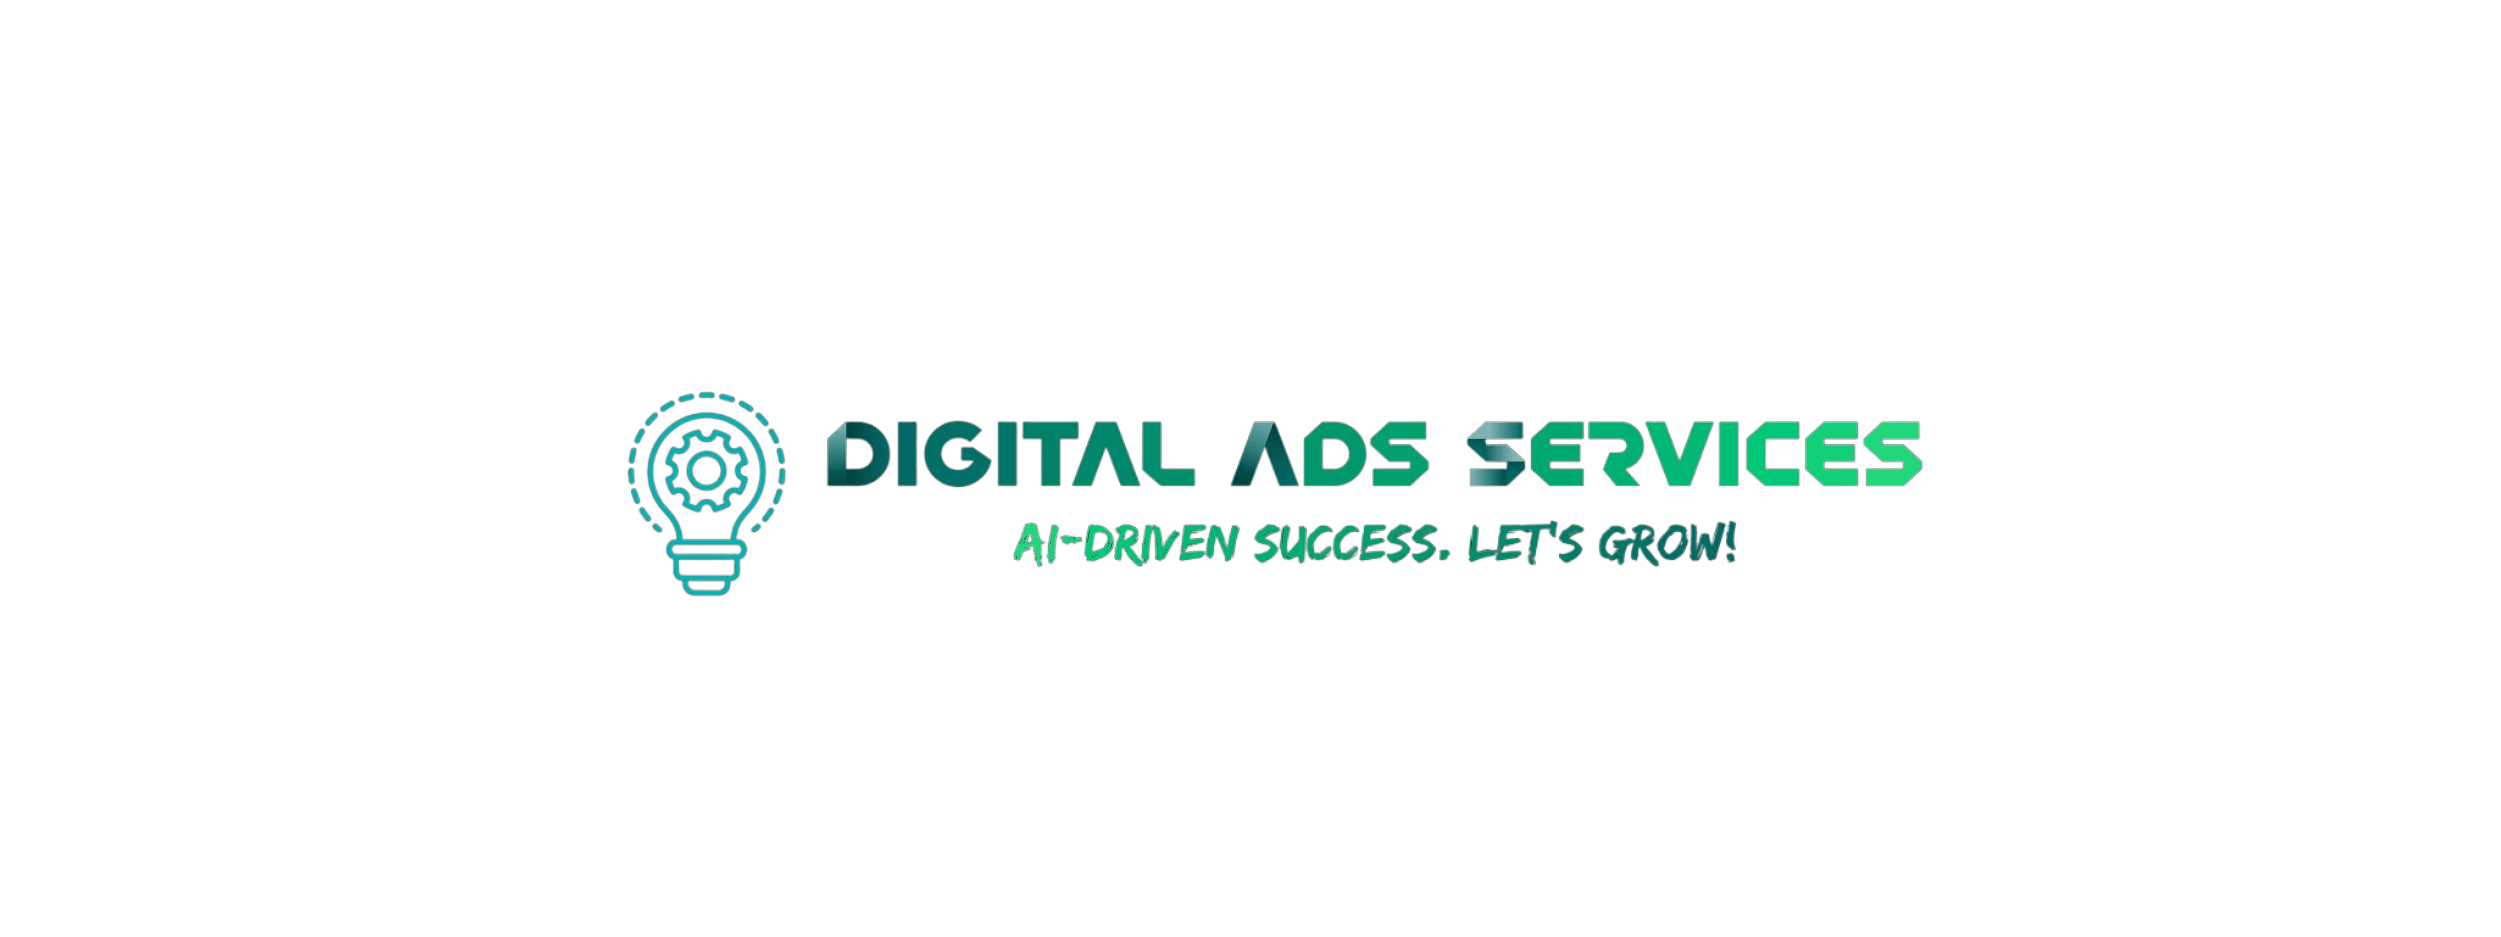 Digital Ads Services